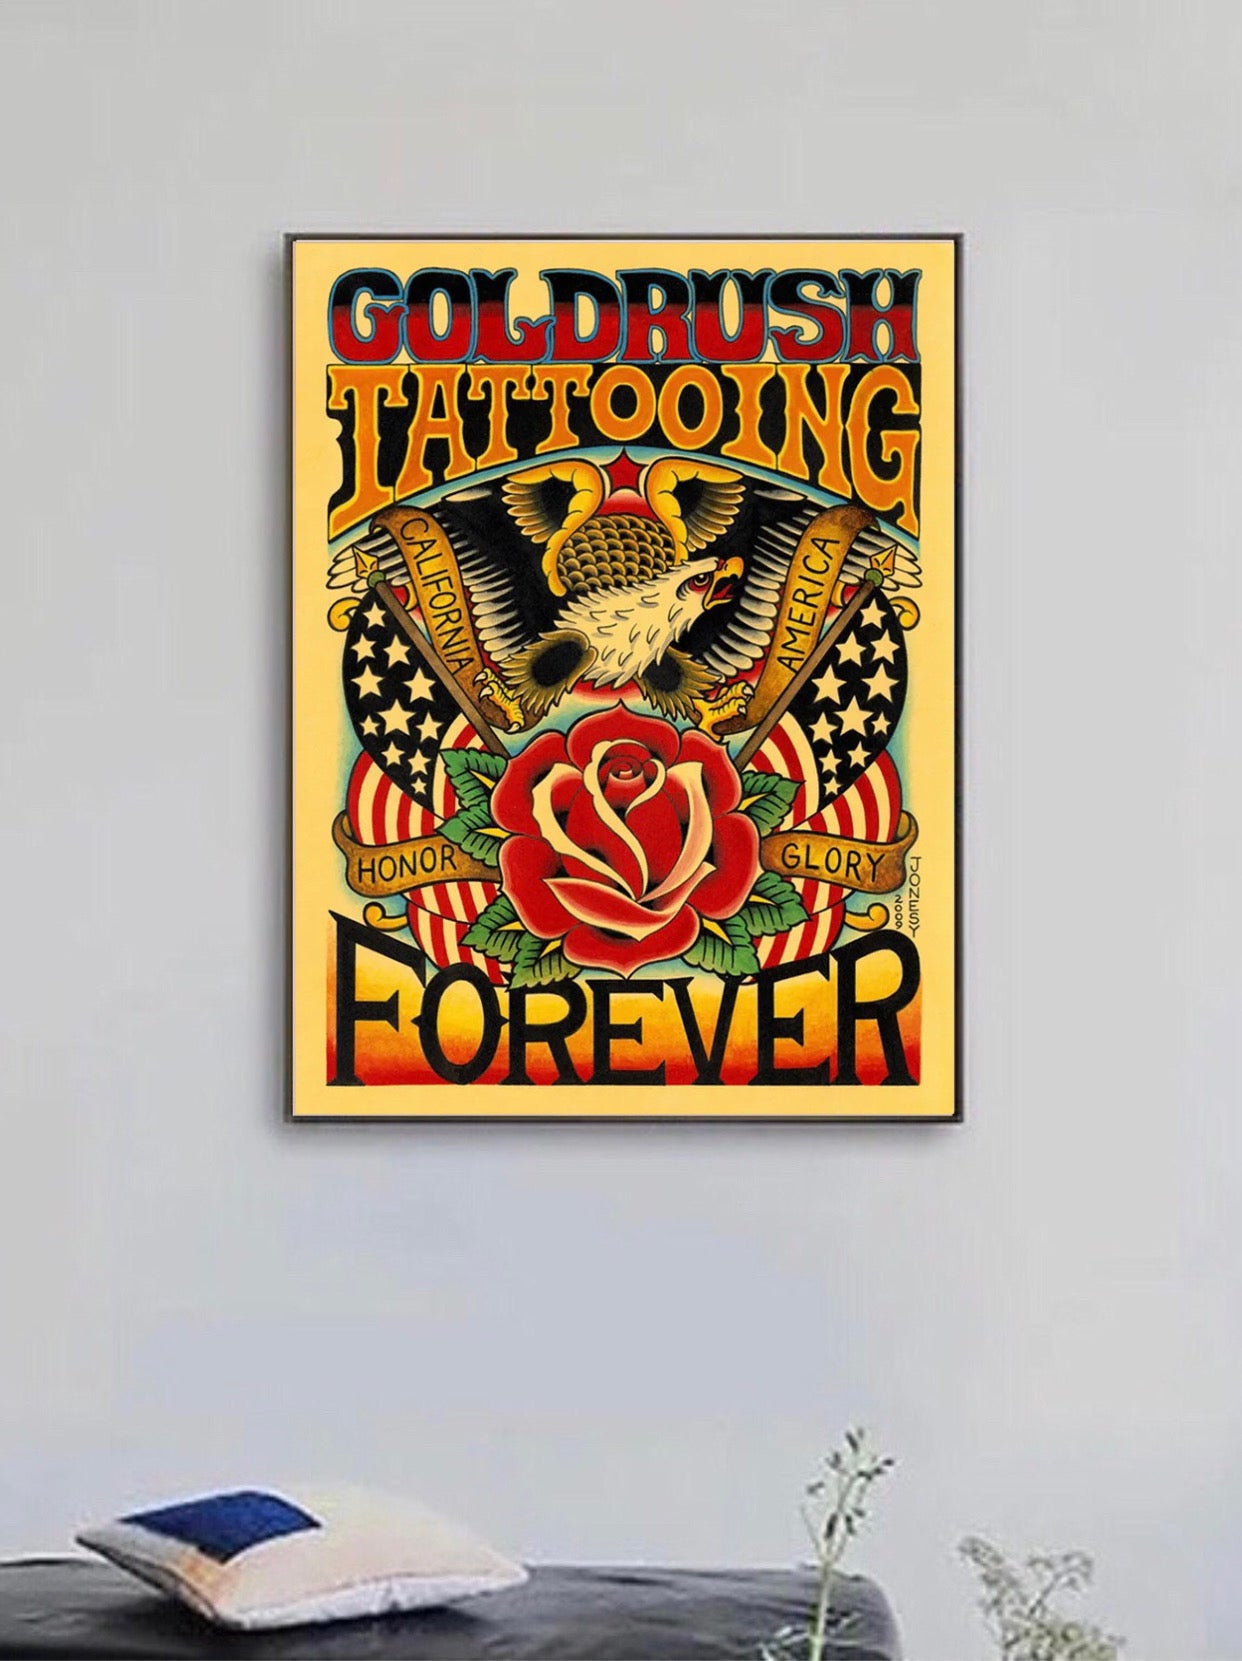 "goldrush tattooing forever" tattoo poster